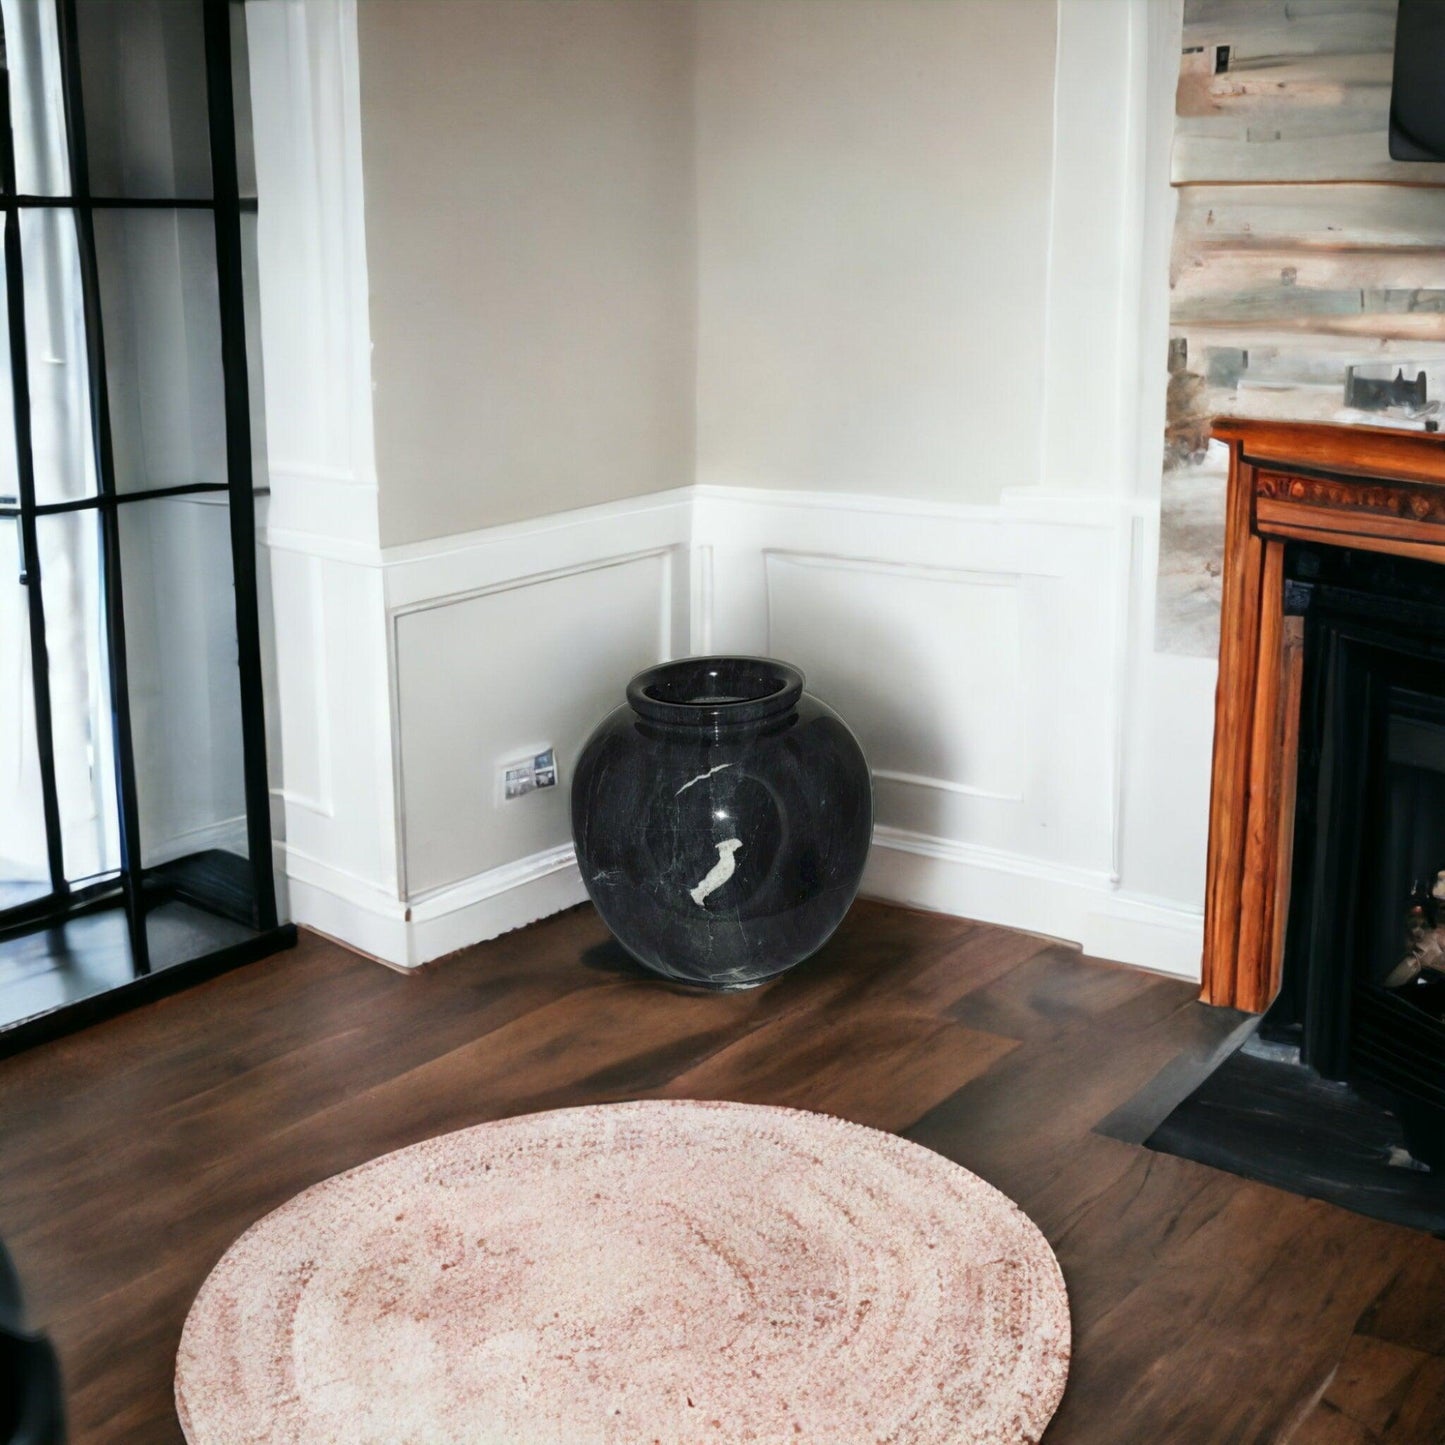 Decorative Vase of Black Marble | 12 inch Round - Nature Home Decor